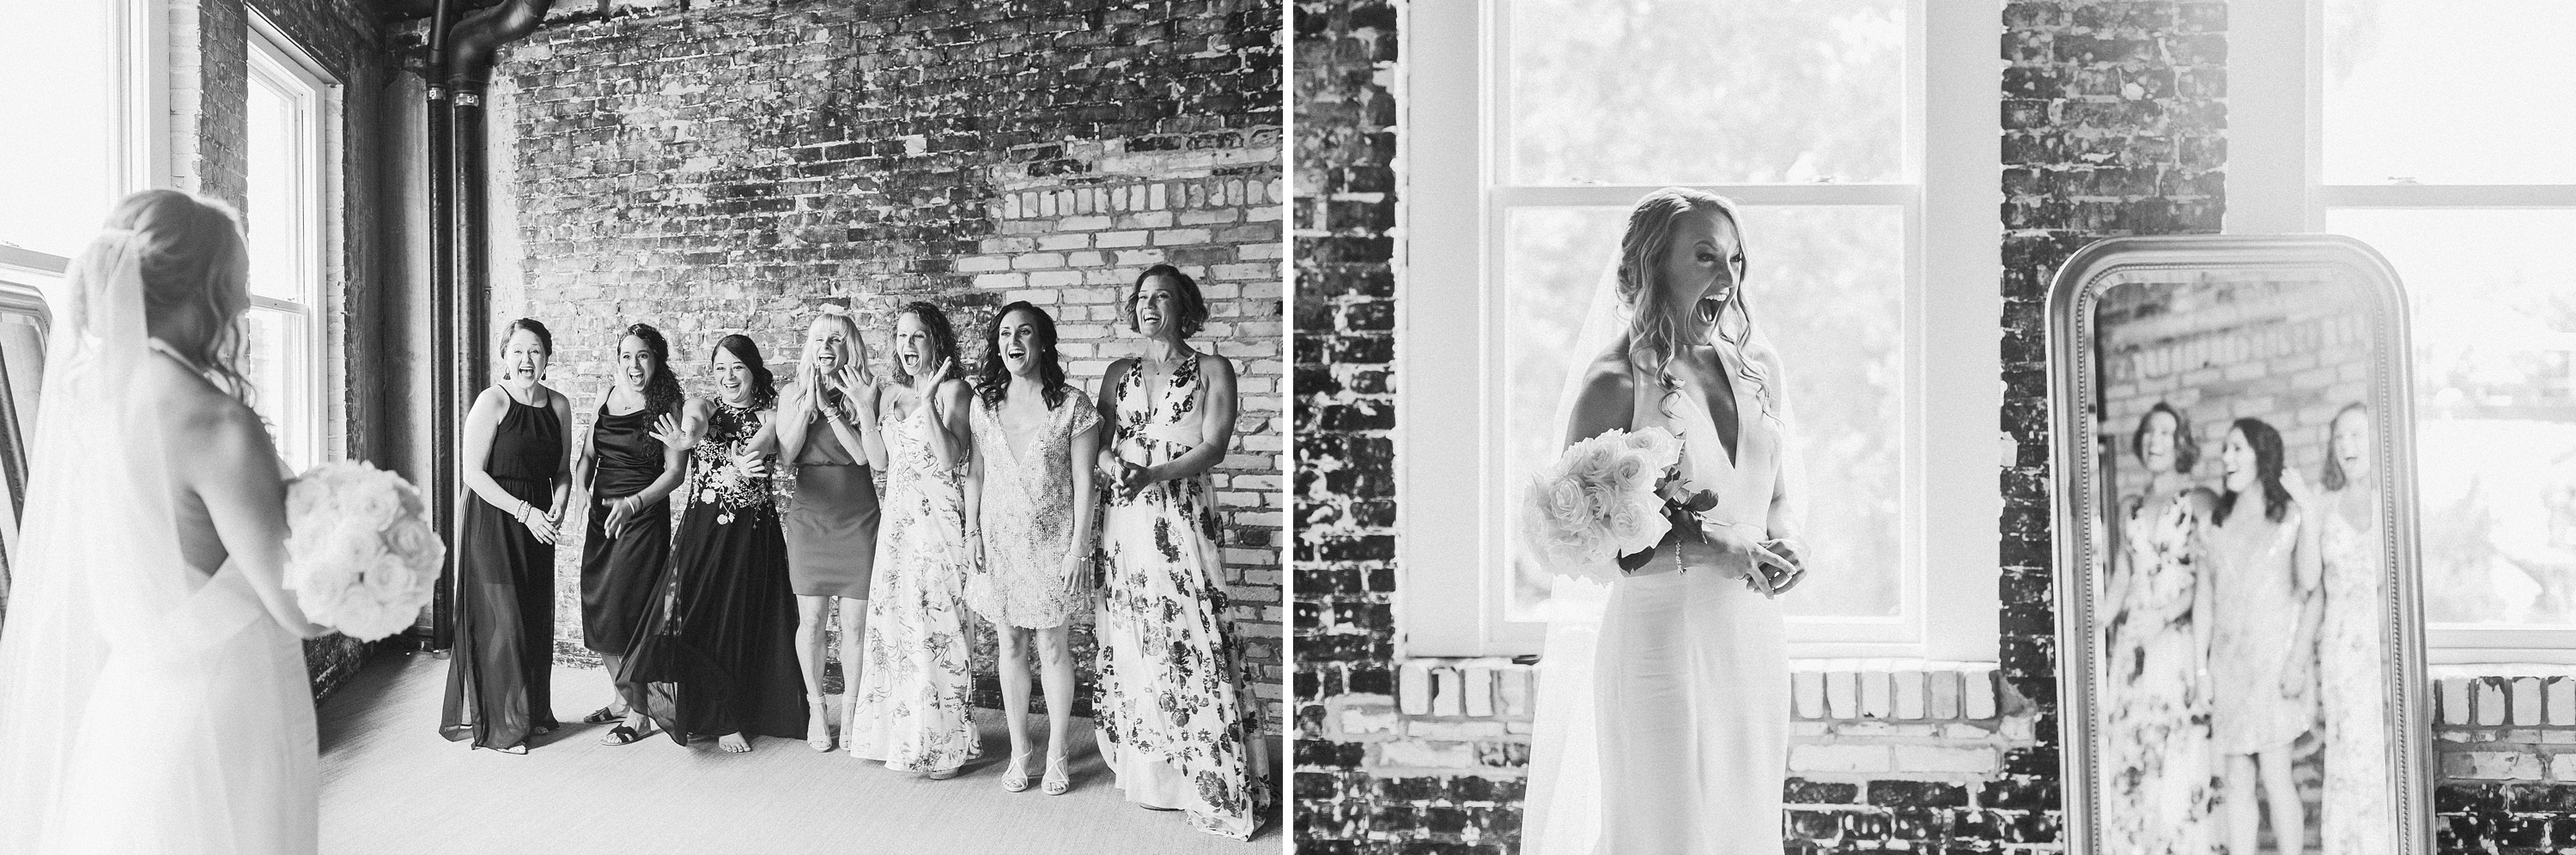 Oxford Exchange Wedding Photographer | © Ailyn LaTorre Photography 2019